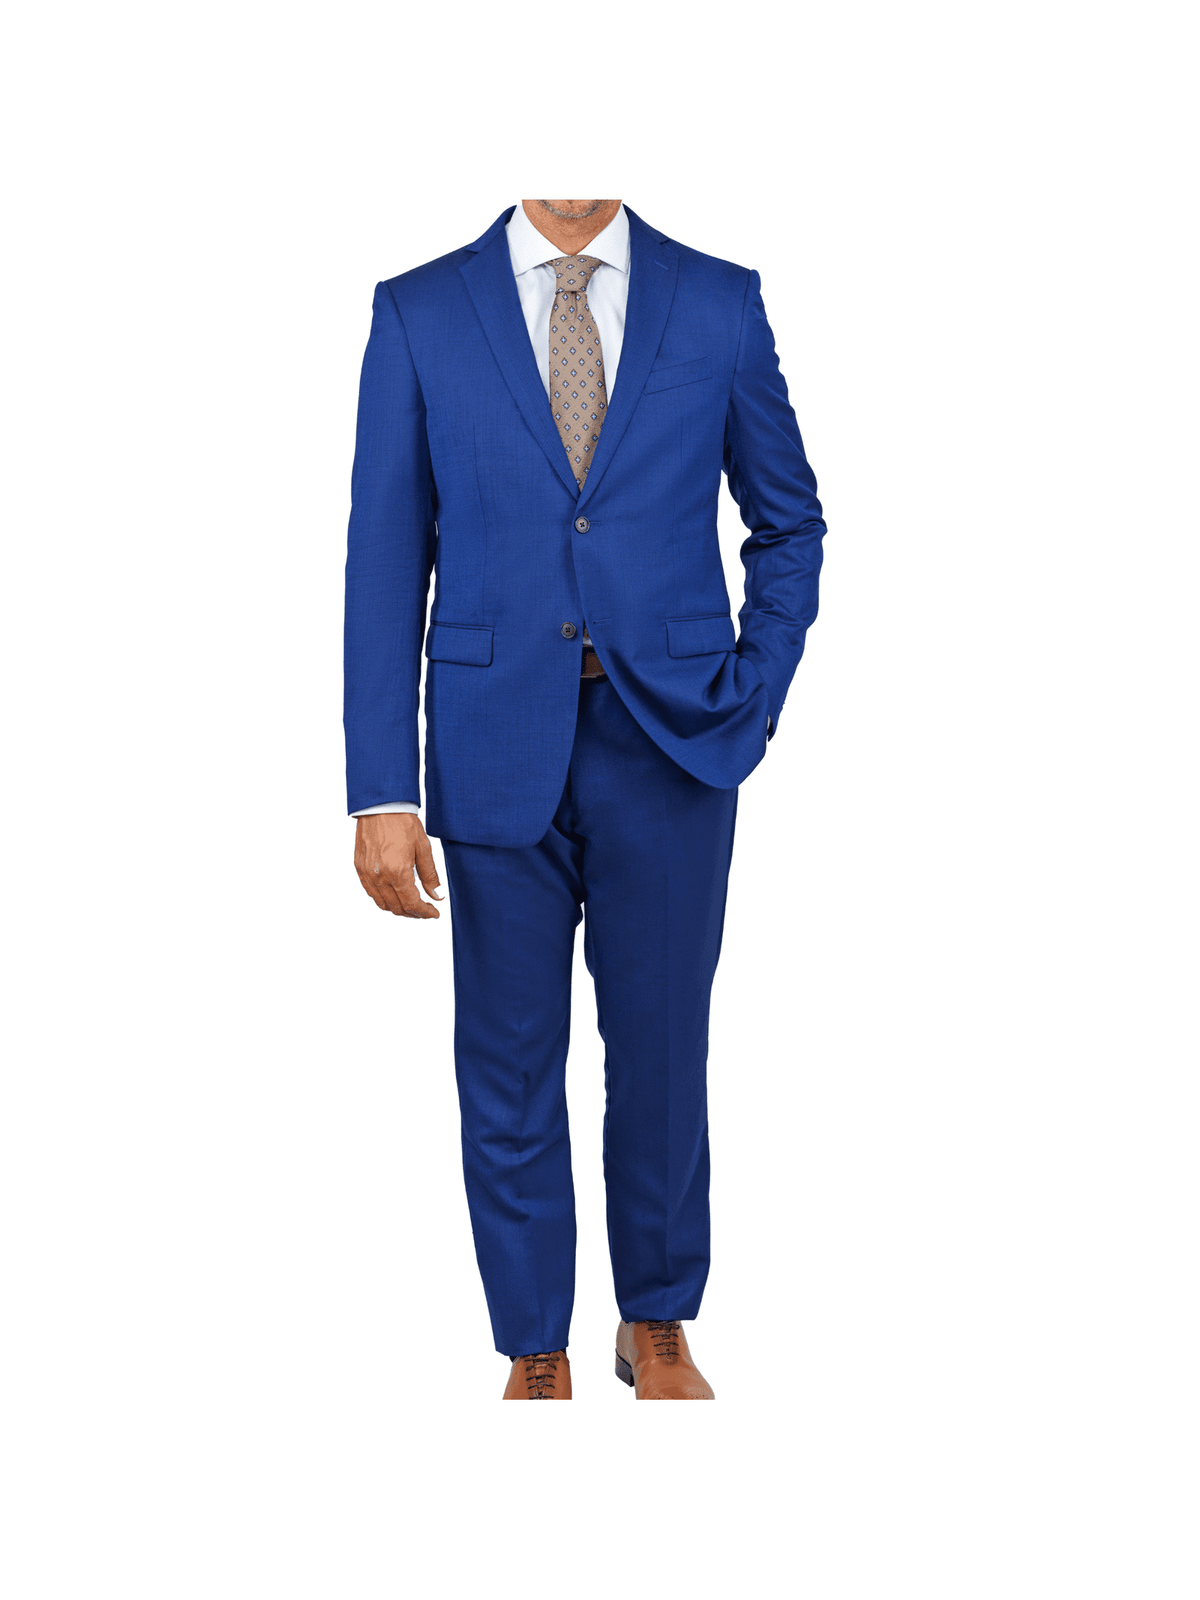 John Varvatos blue textured slim fit suit